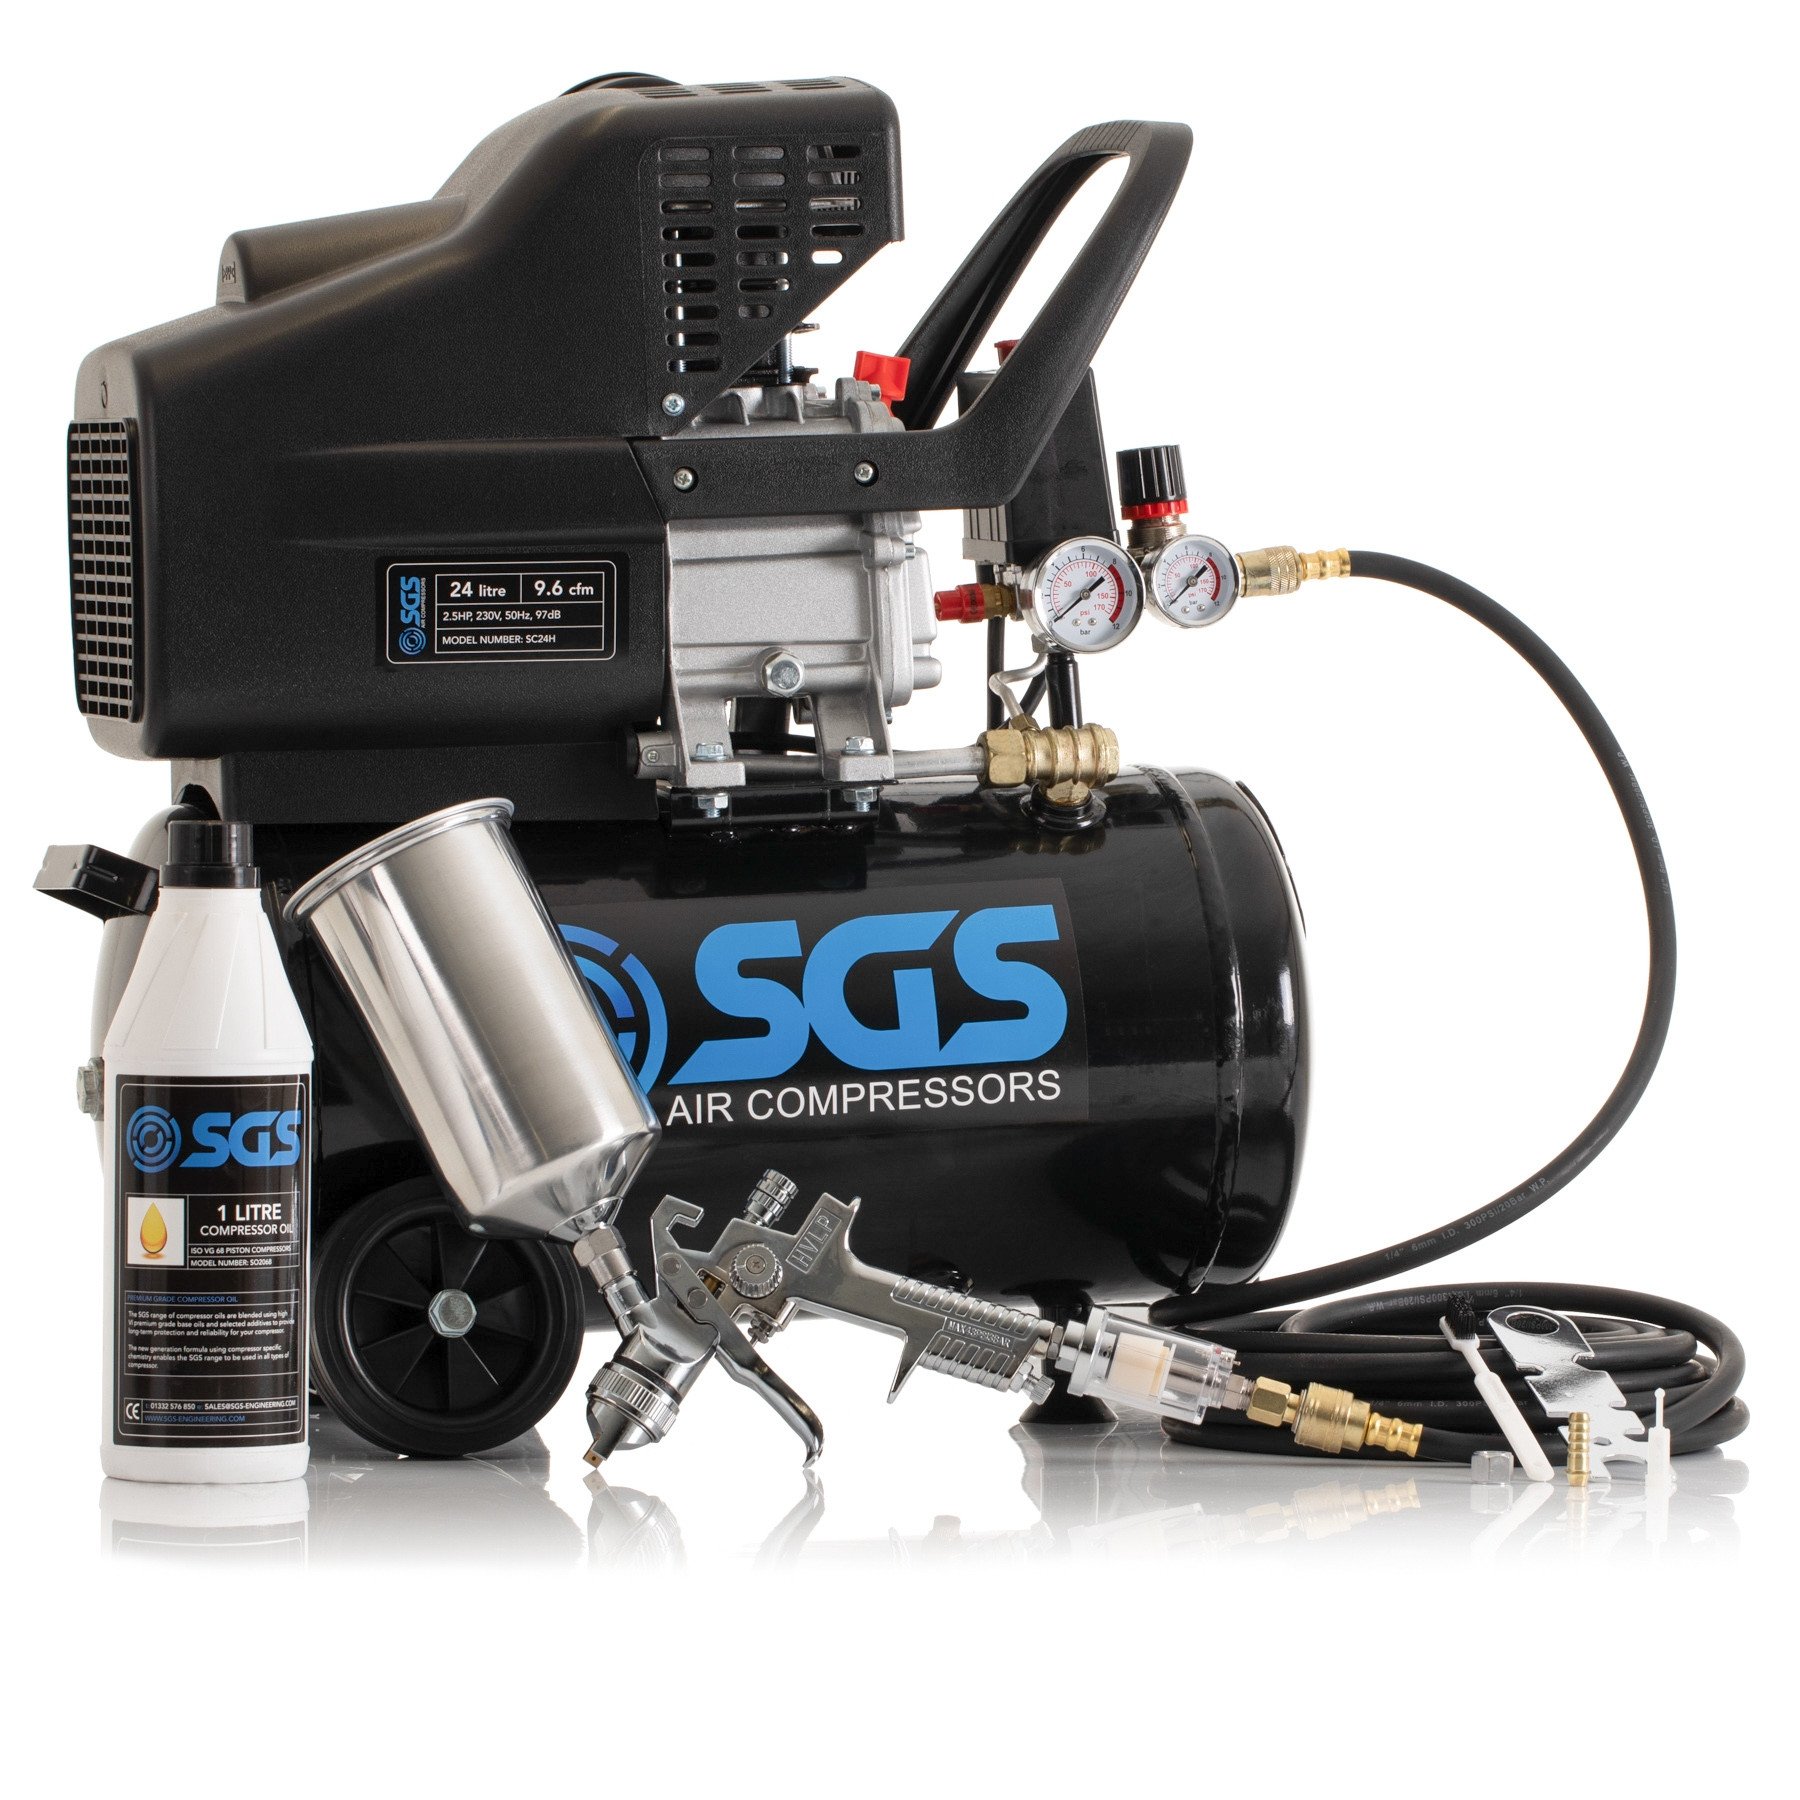 SGS 24升直接驱动空气压缩机和喷枪套件-9.6CFM 2.5HP 24L